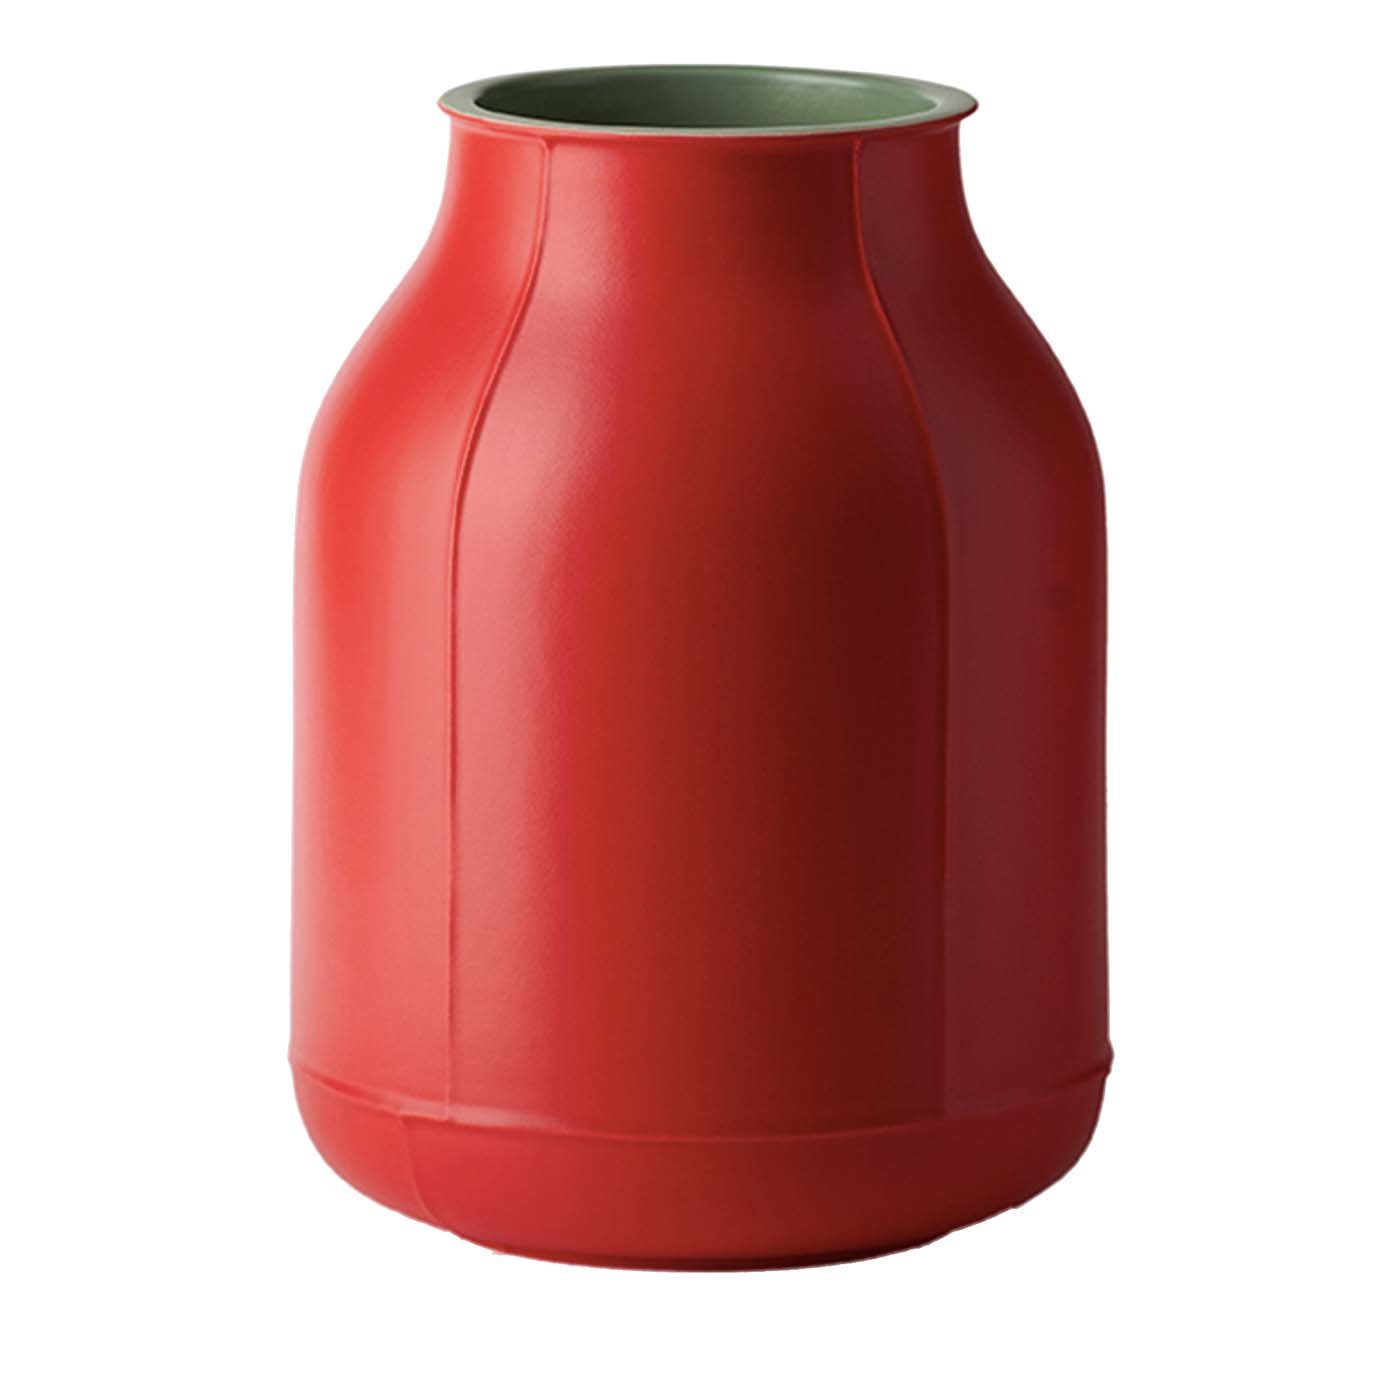 Grand vase baril rouge de Benjamin Hubert - Vue principale